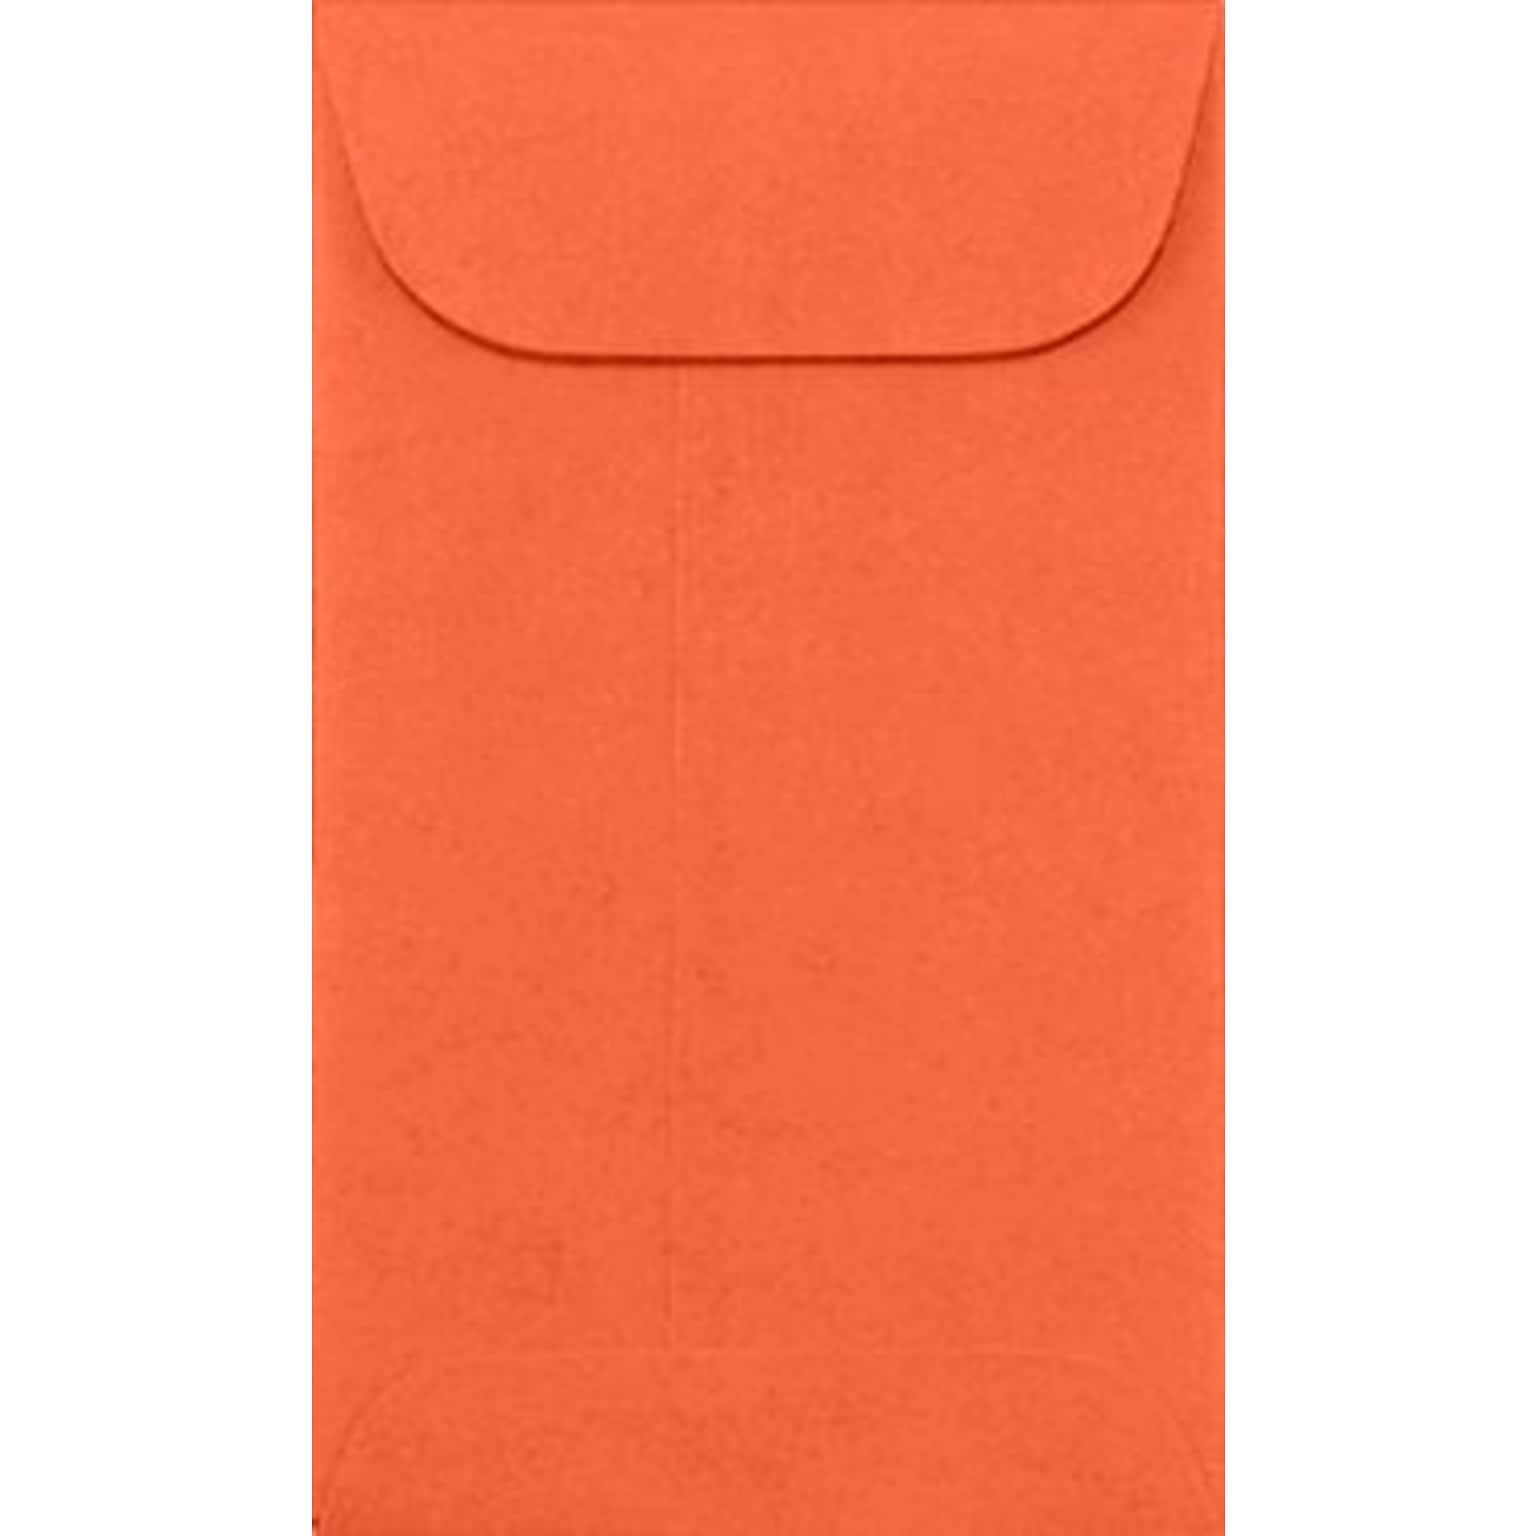 LUX #5 1/2 Coin Envelopes (3 1/8 x 5 1/2) 250/Box, Bright Orange (512CO-BO-250)